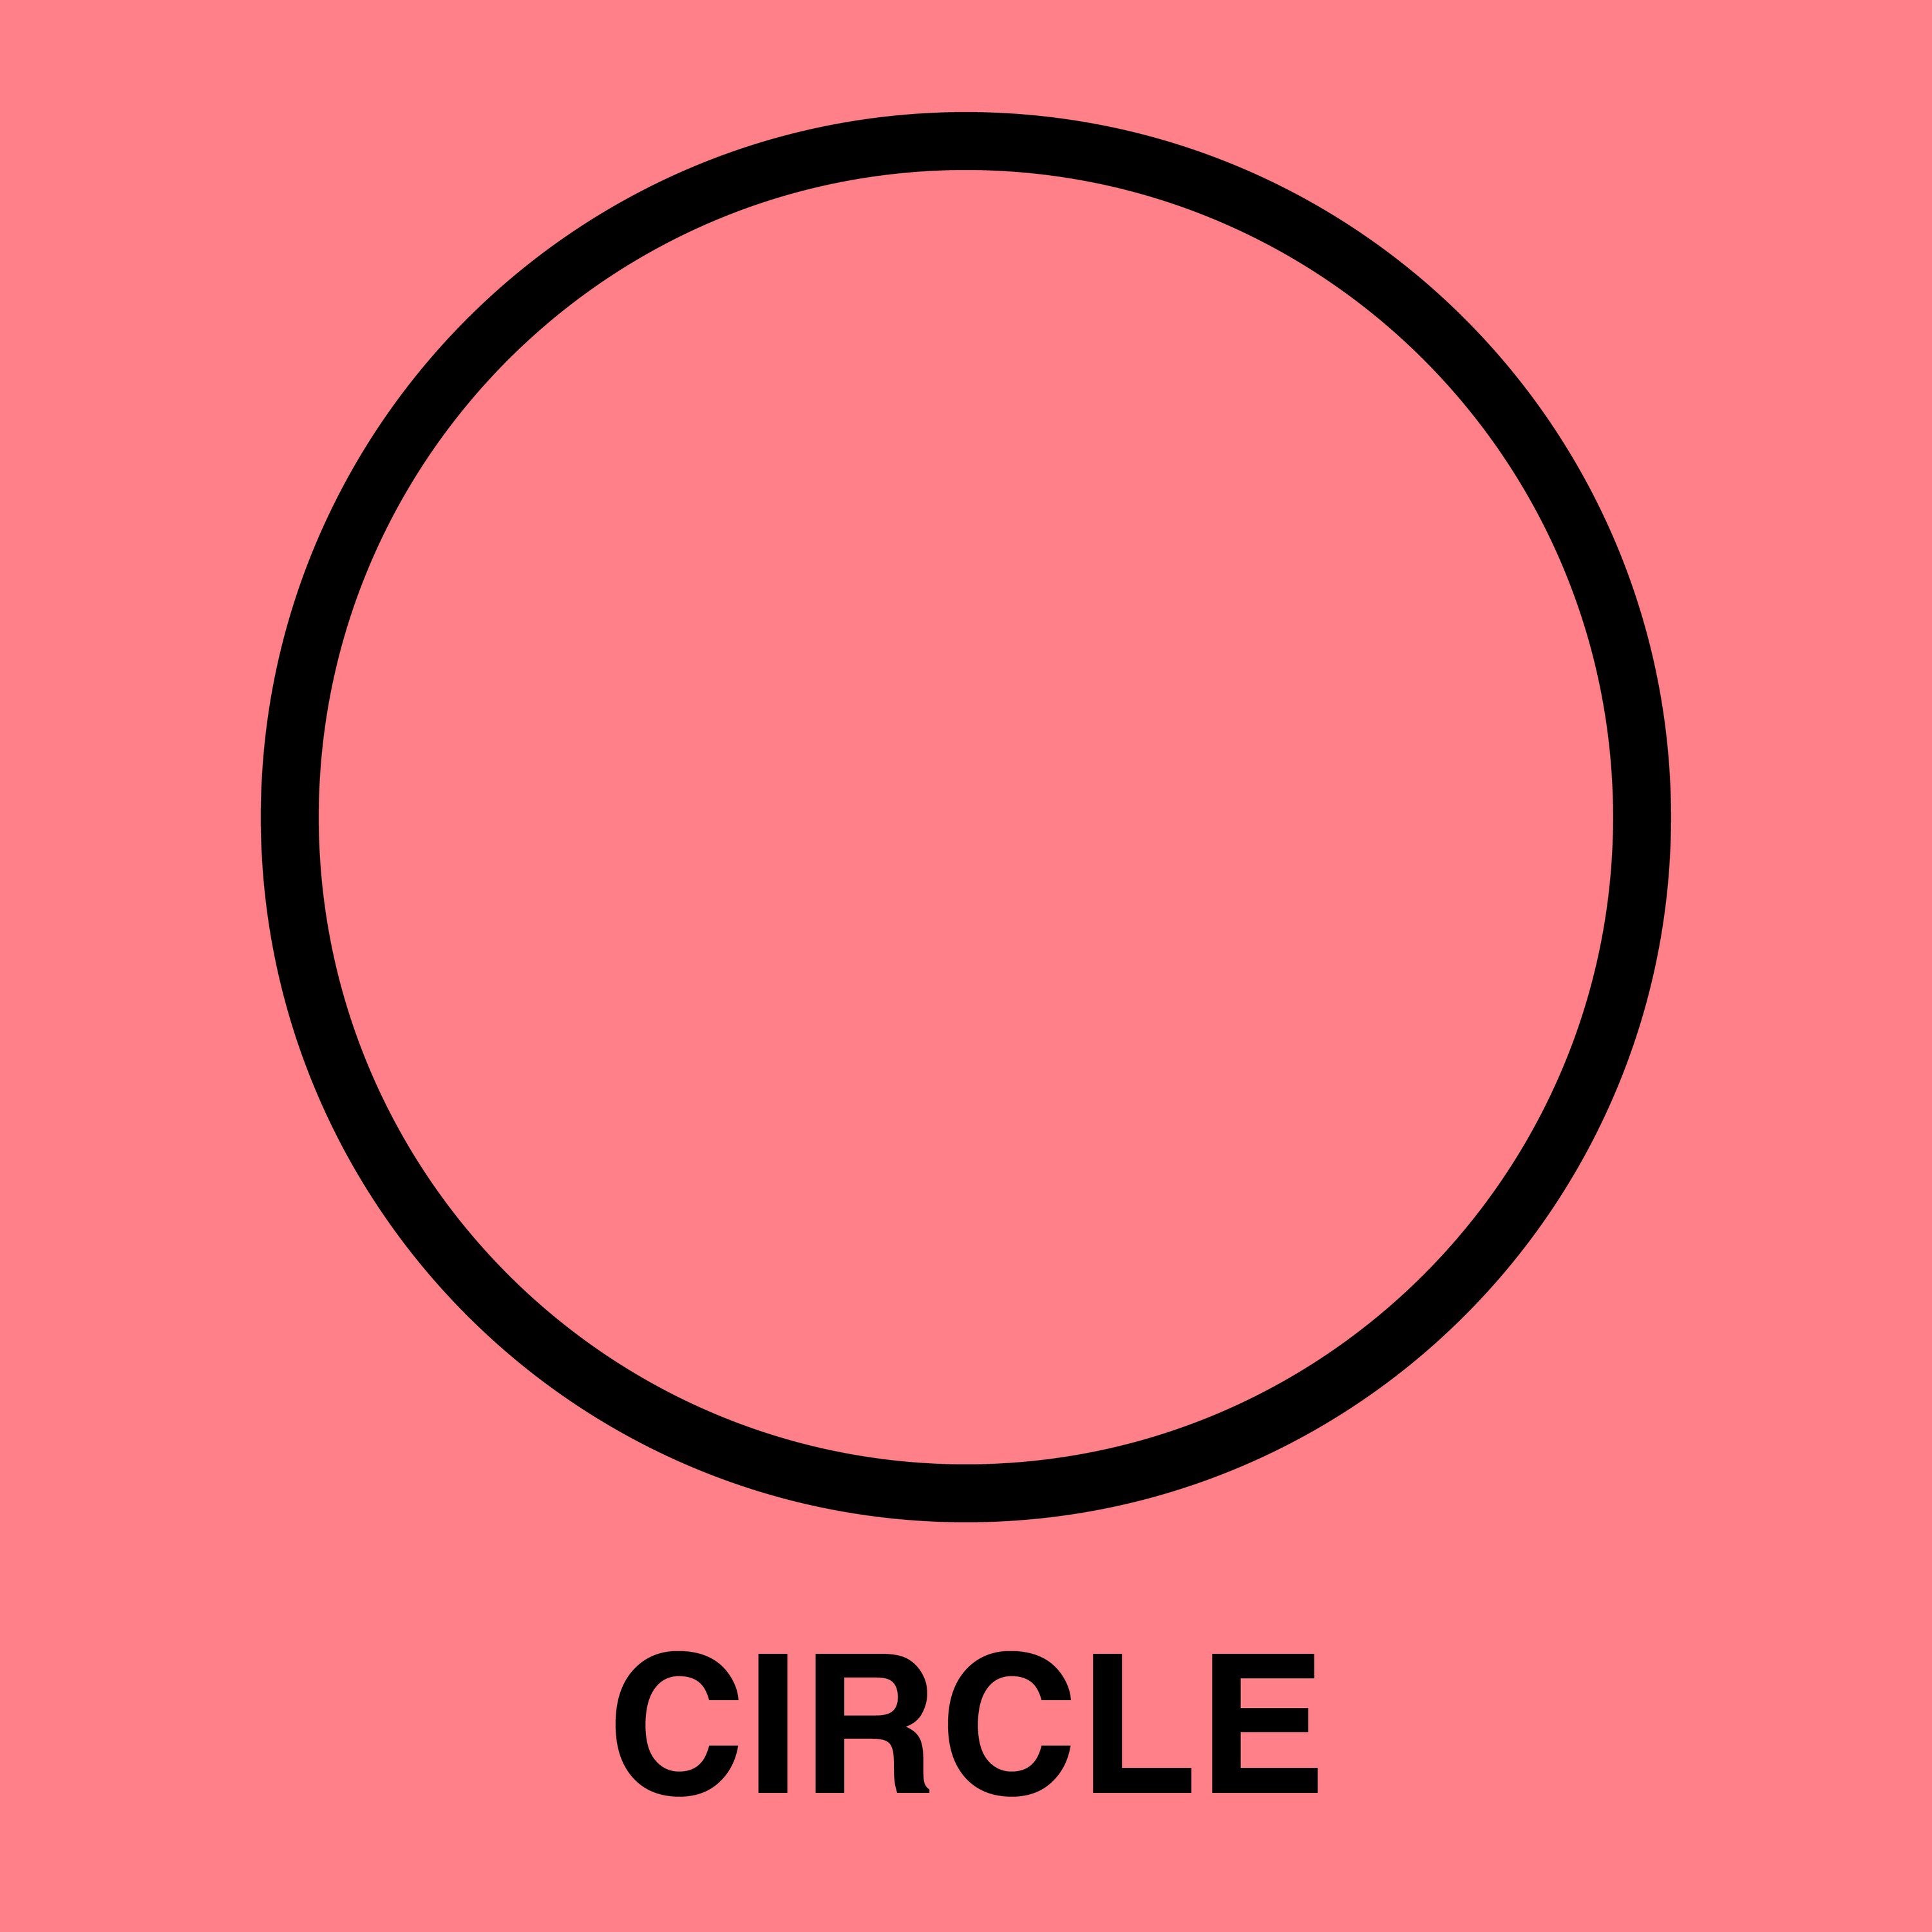 clipart circle shape - photo #45